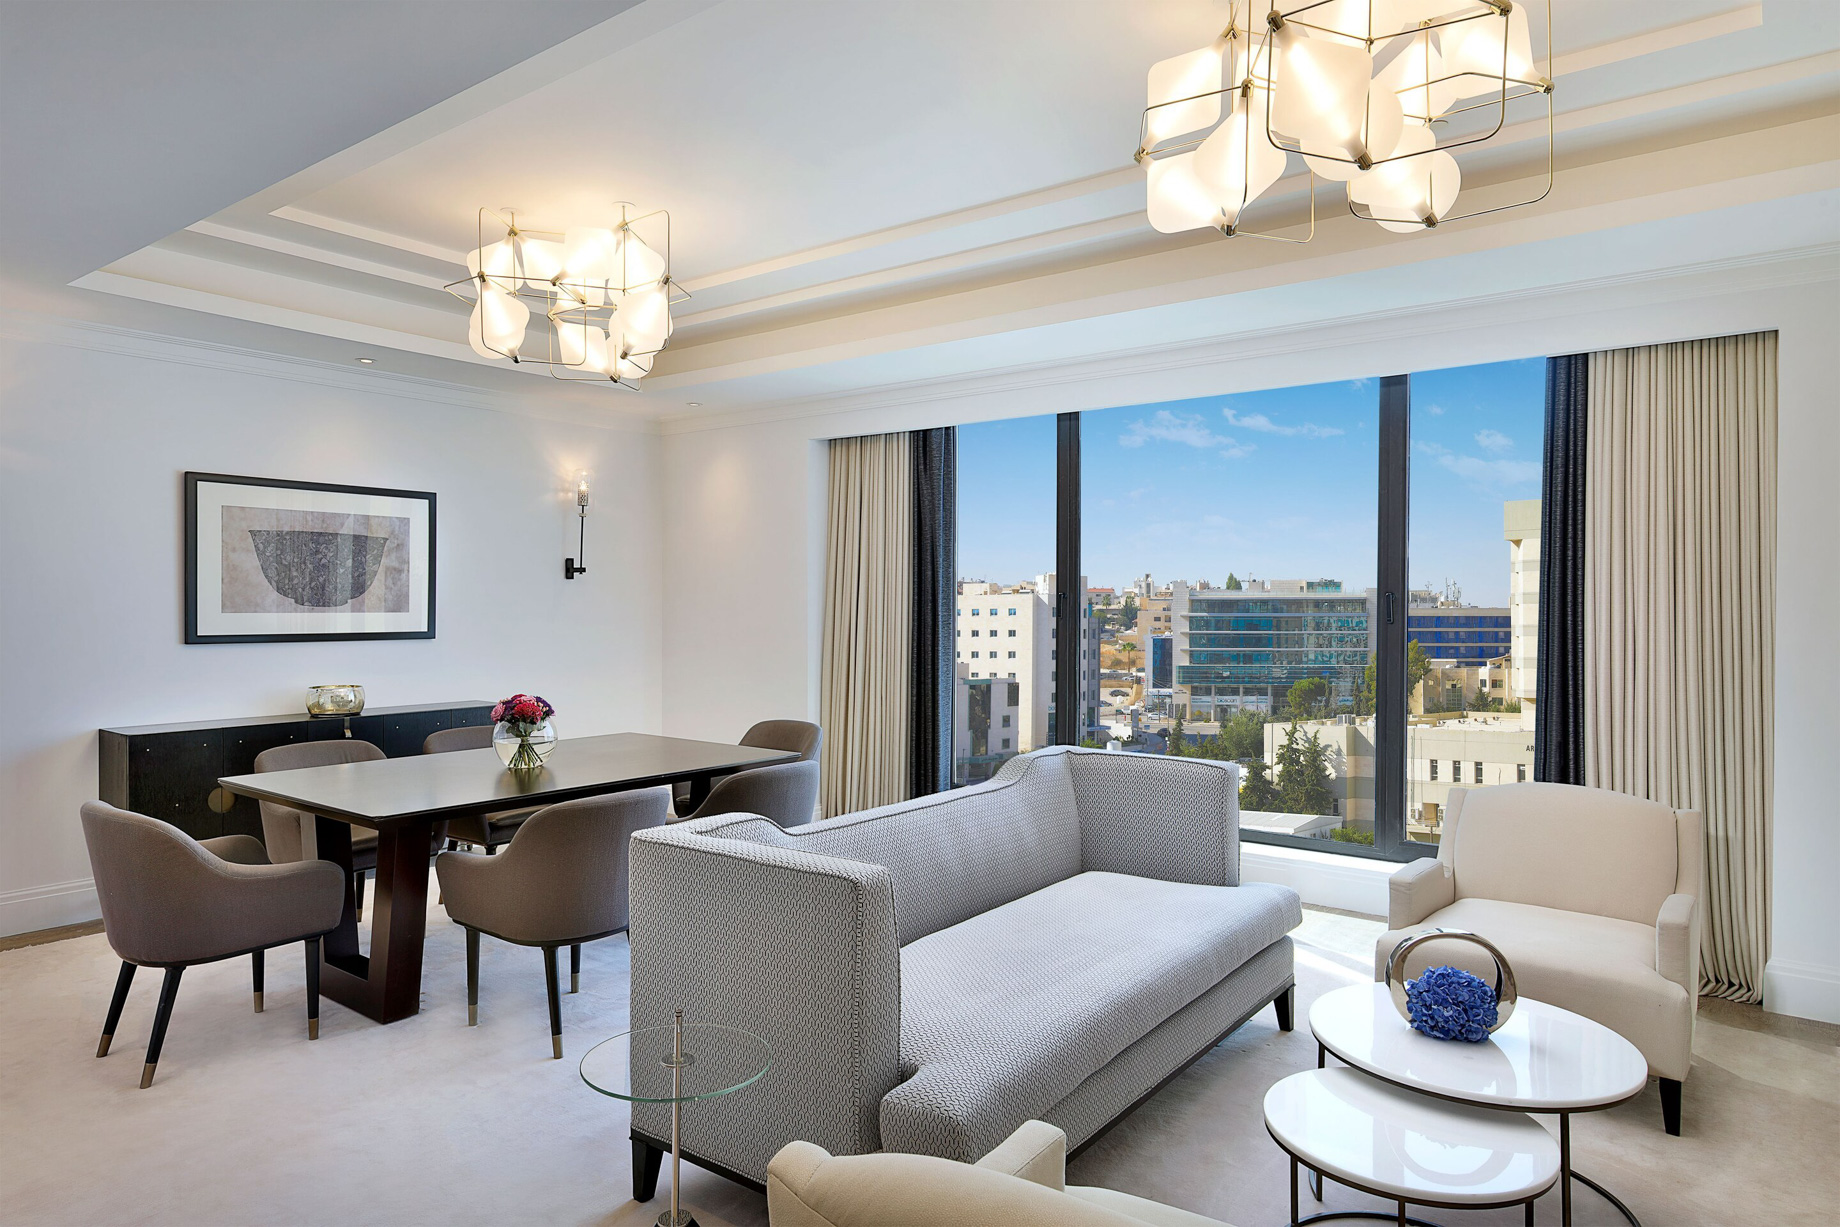 The St. Regis Amman Hotel - Amman, Jordan - Three Bedroom Apartment Living Room And Dining Area